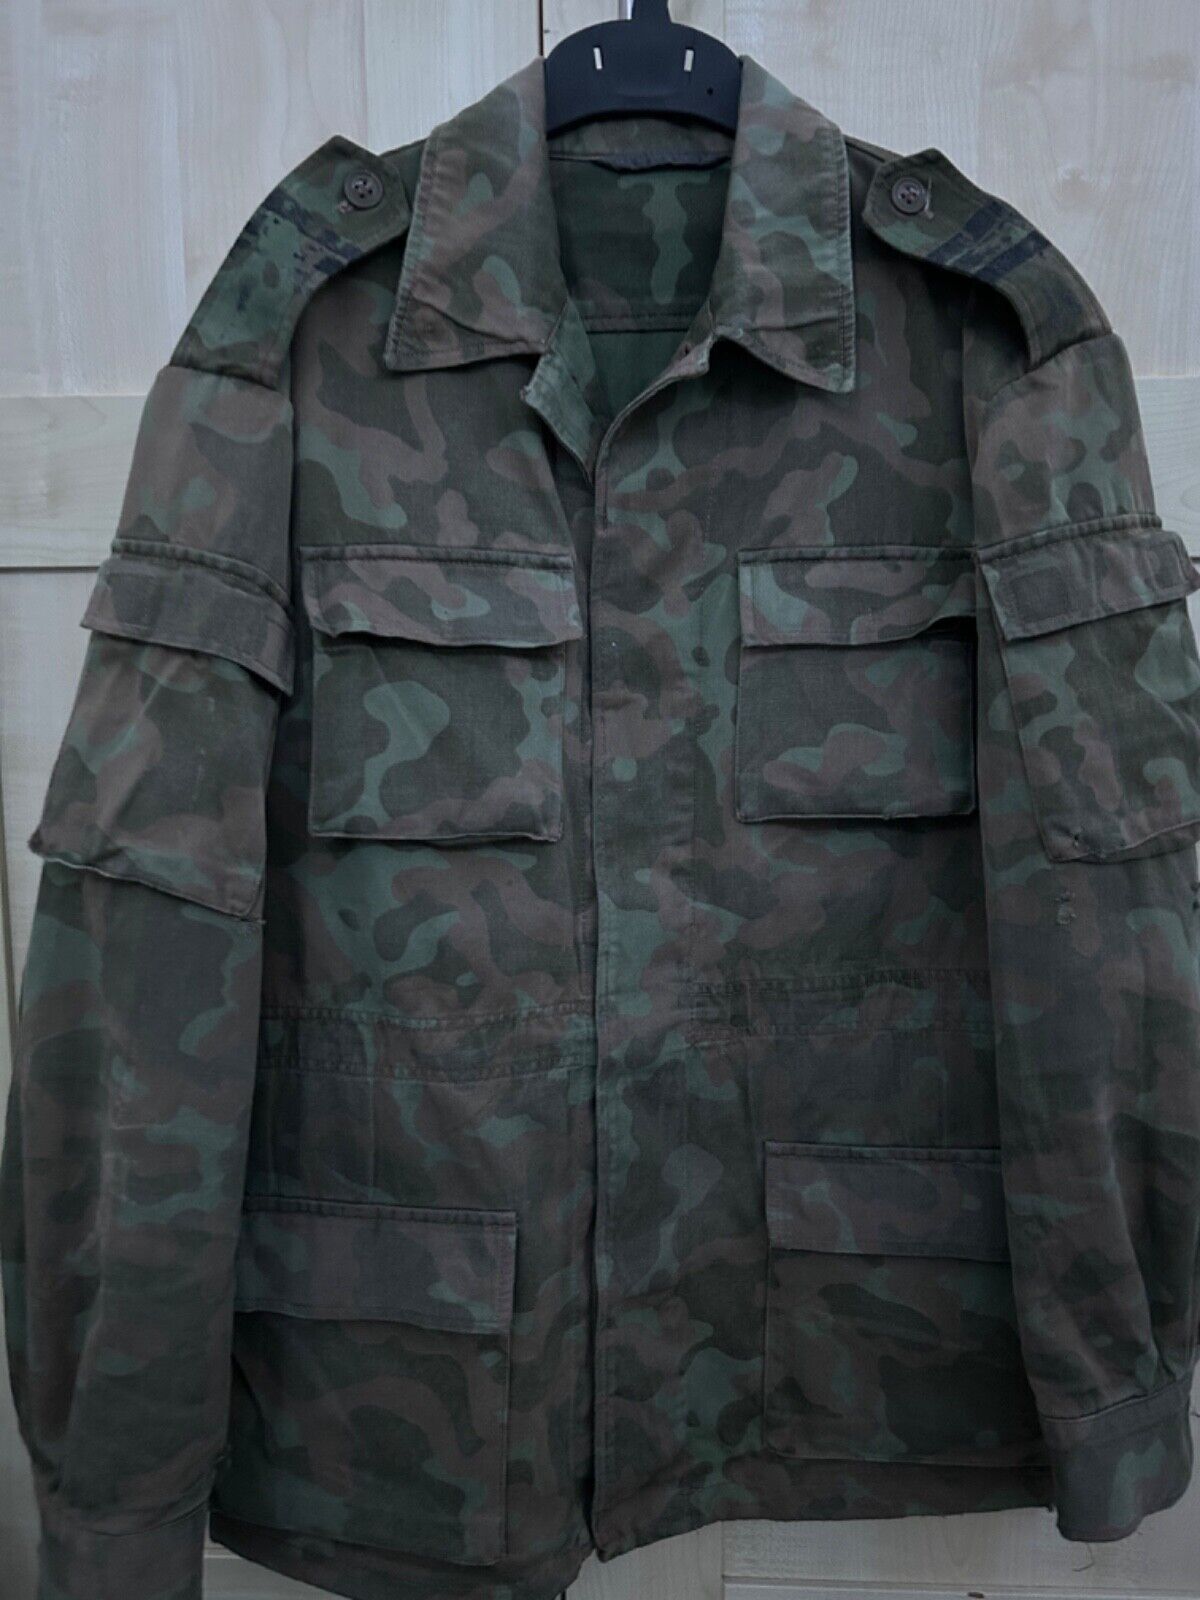 Rare soviet USSR/Russian TTsKO jacket, Dubok,vsr 84 in size 48-3 butan camo